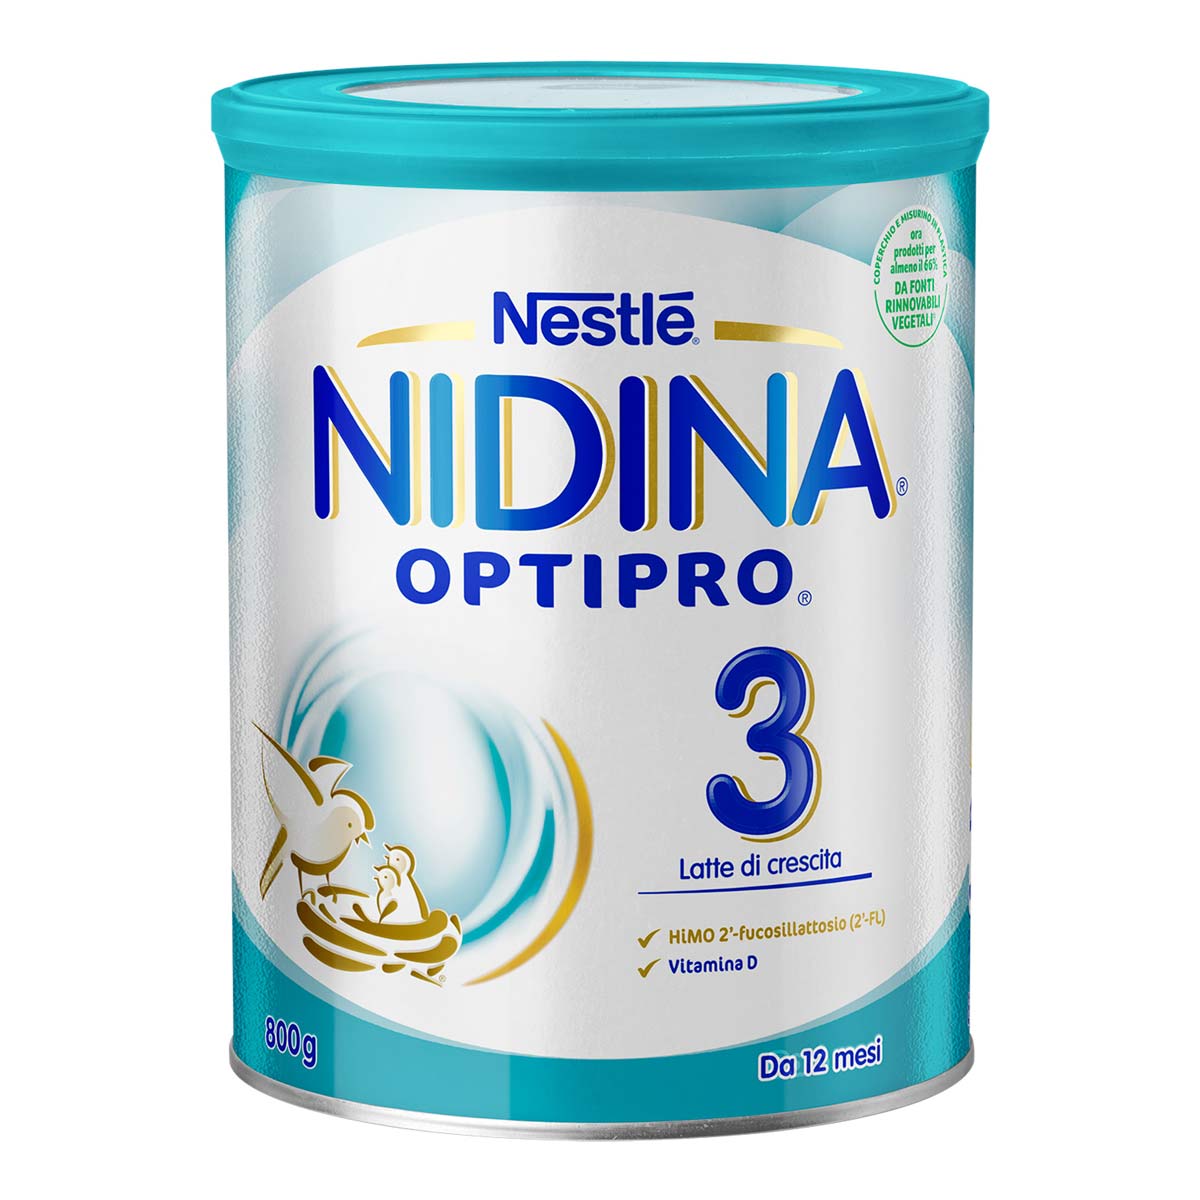 Nestlé NIDINA OPTIPRO 3 800g, Latte di crescita in polvere, dai 12 mesi